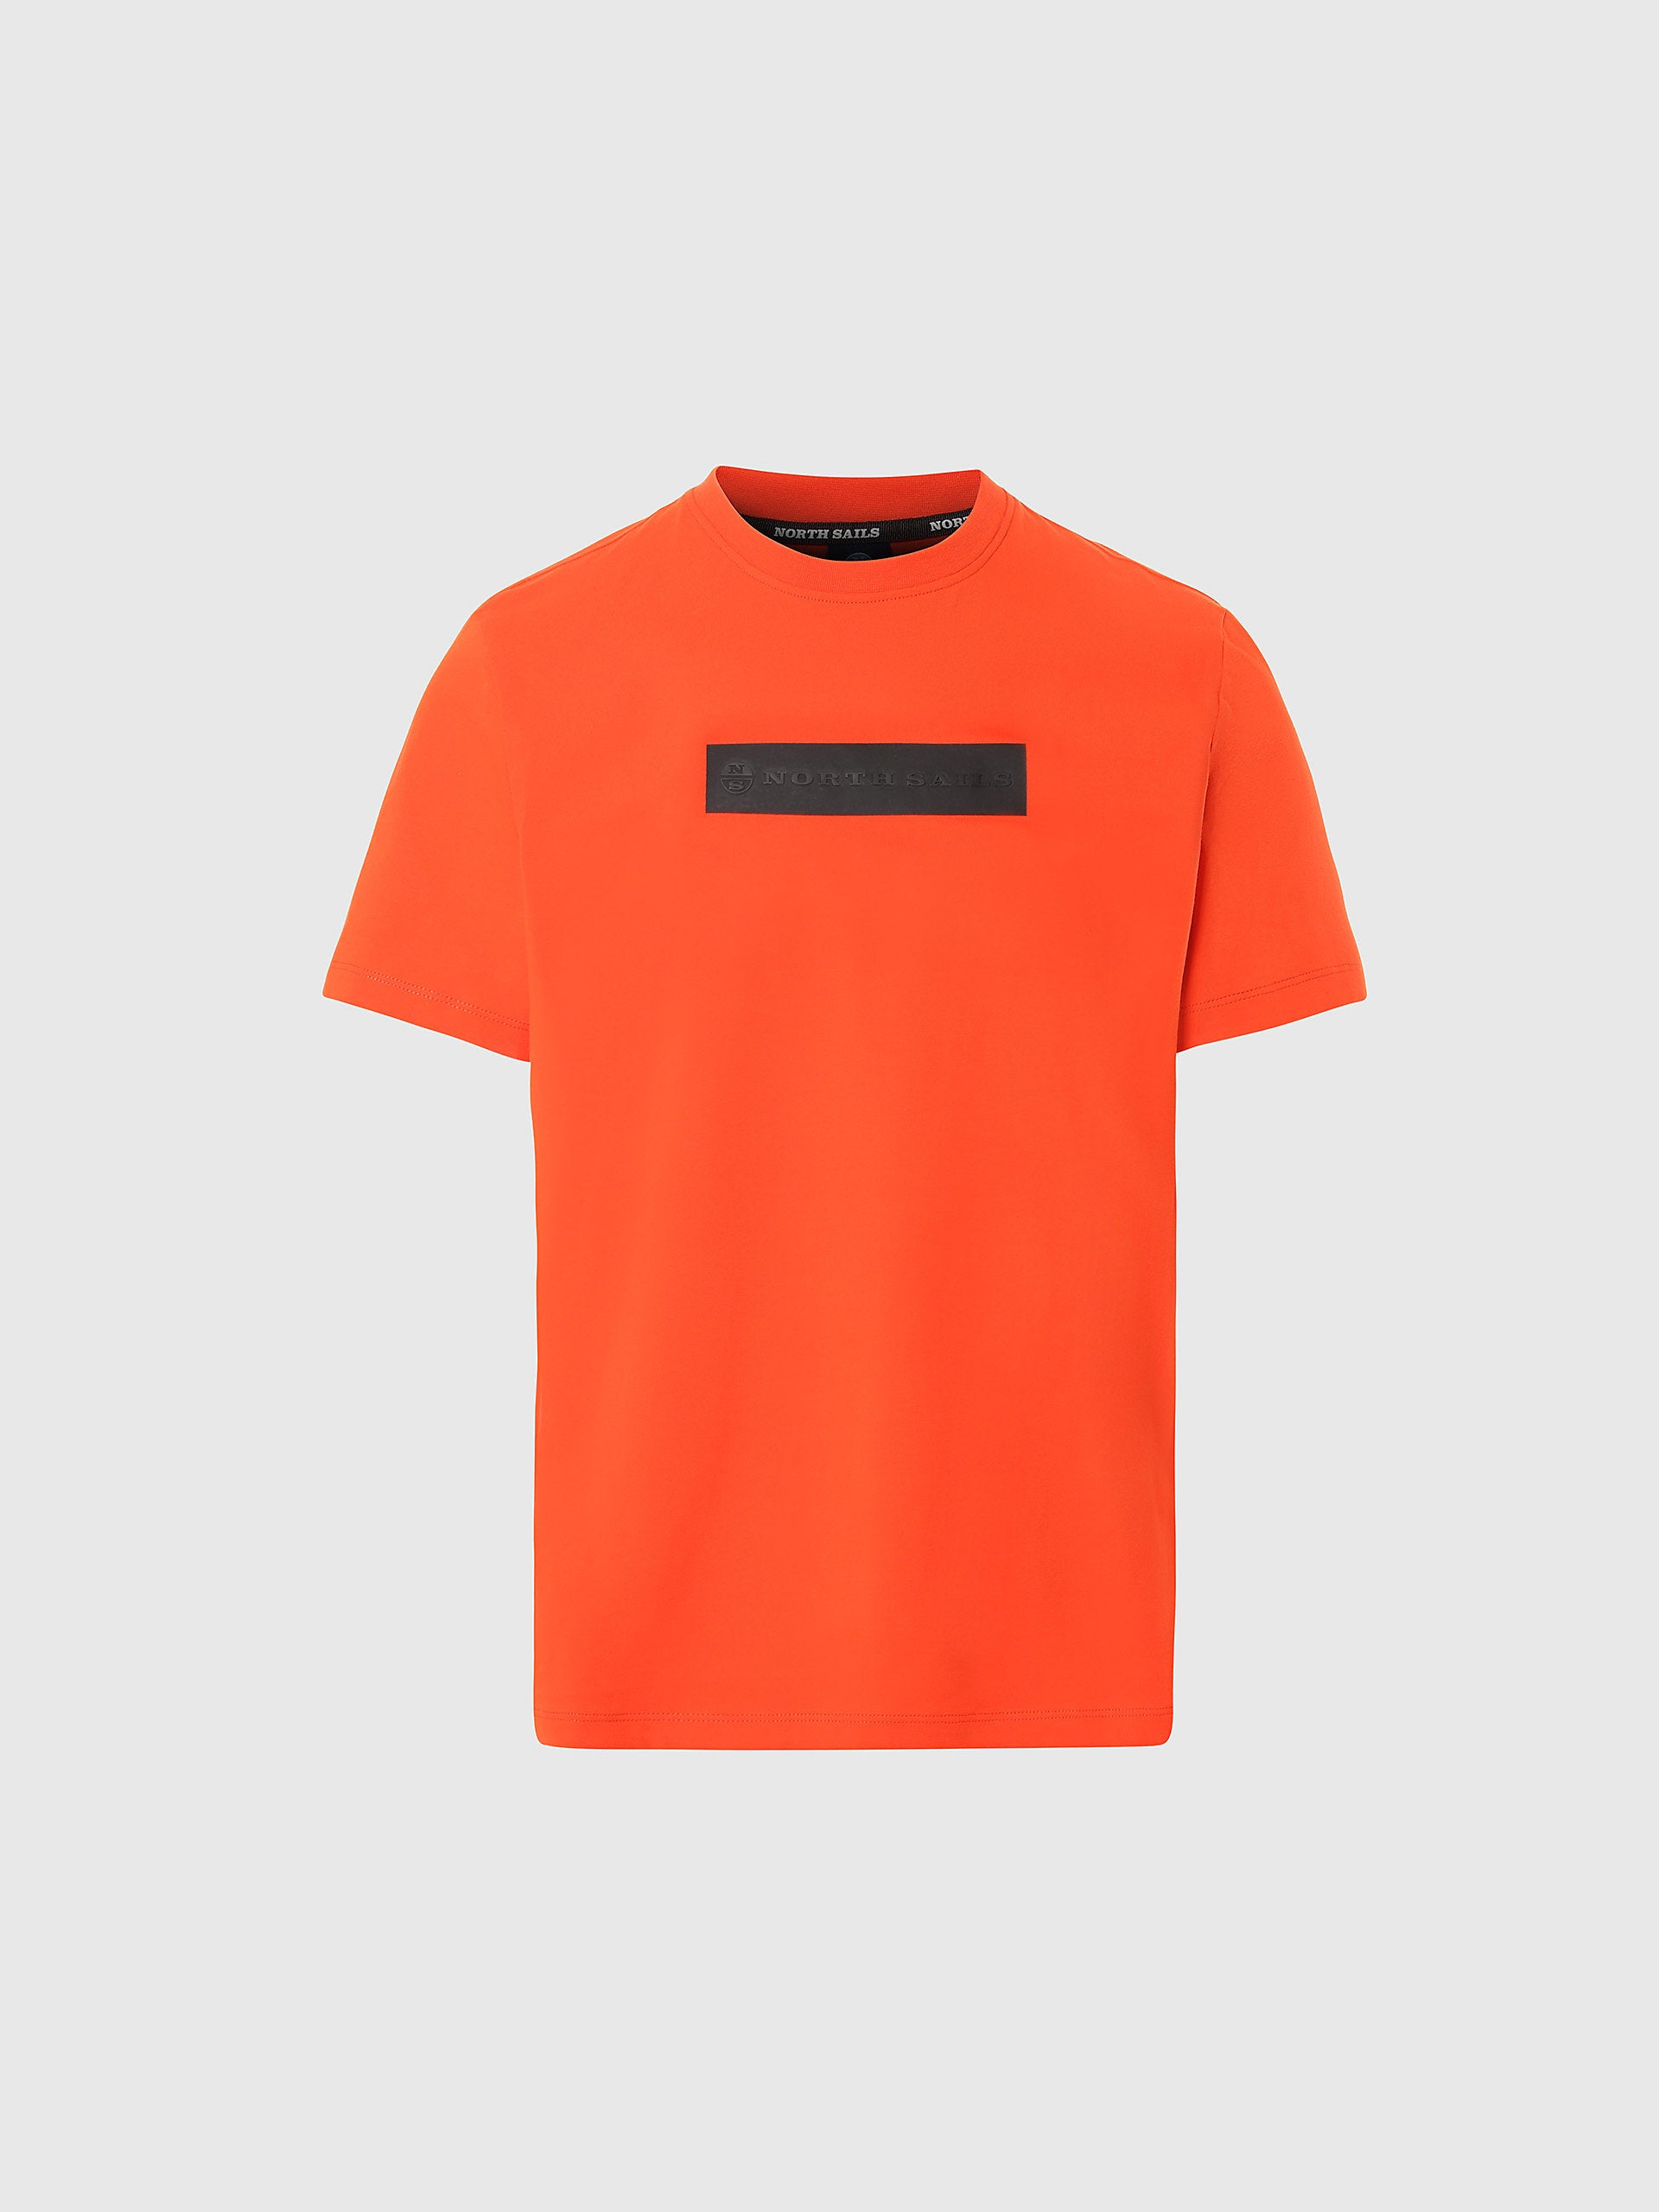 North Sails - T-shirt con logo riflettenteNorth SailsBright orange3XL